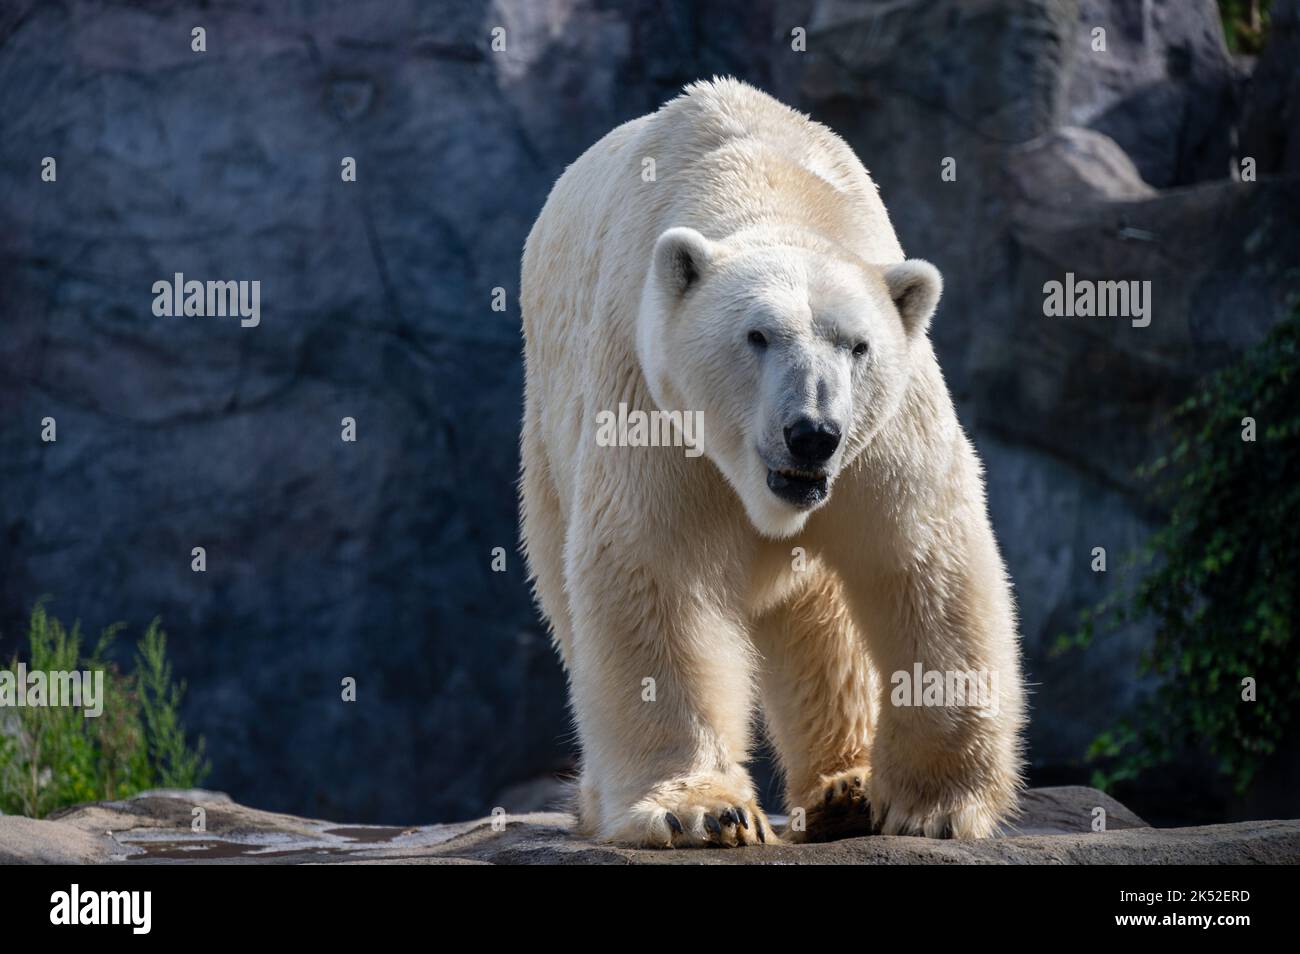 A large white Icebear walking around Stock Photo